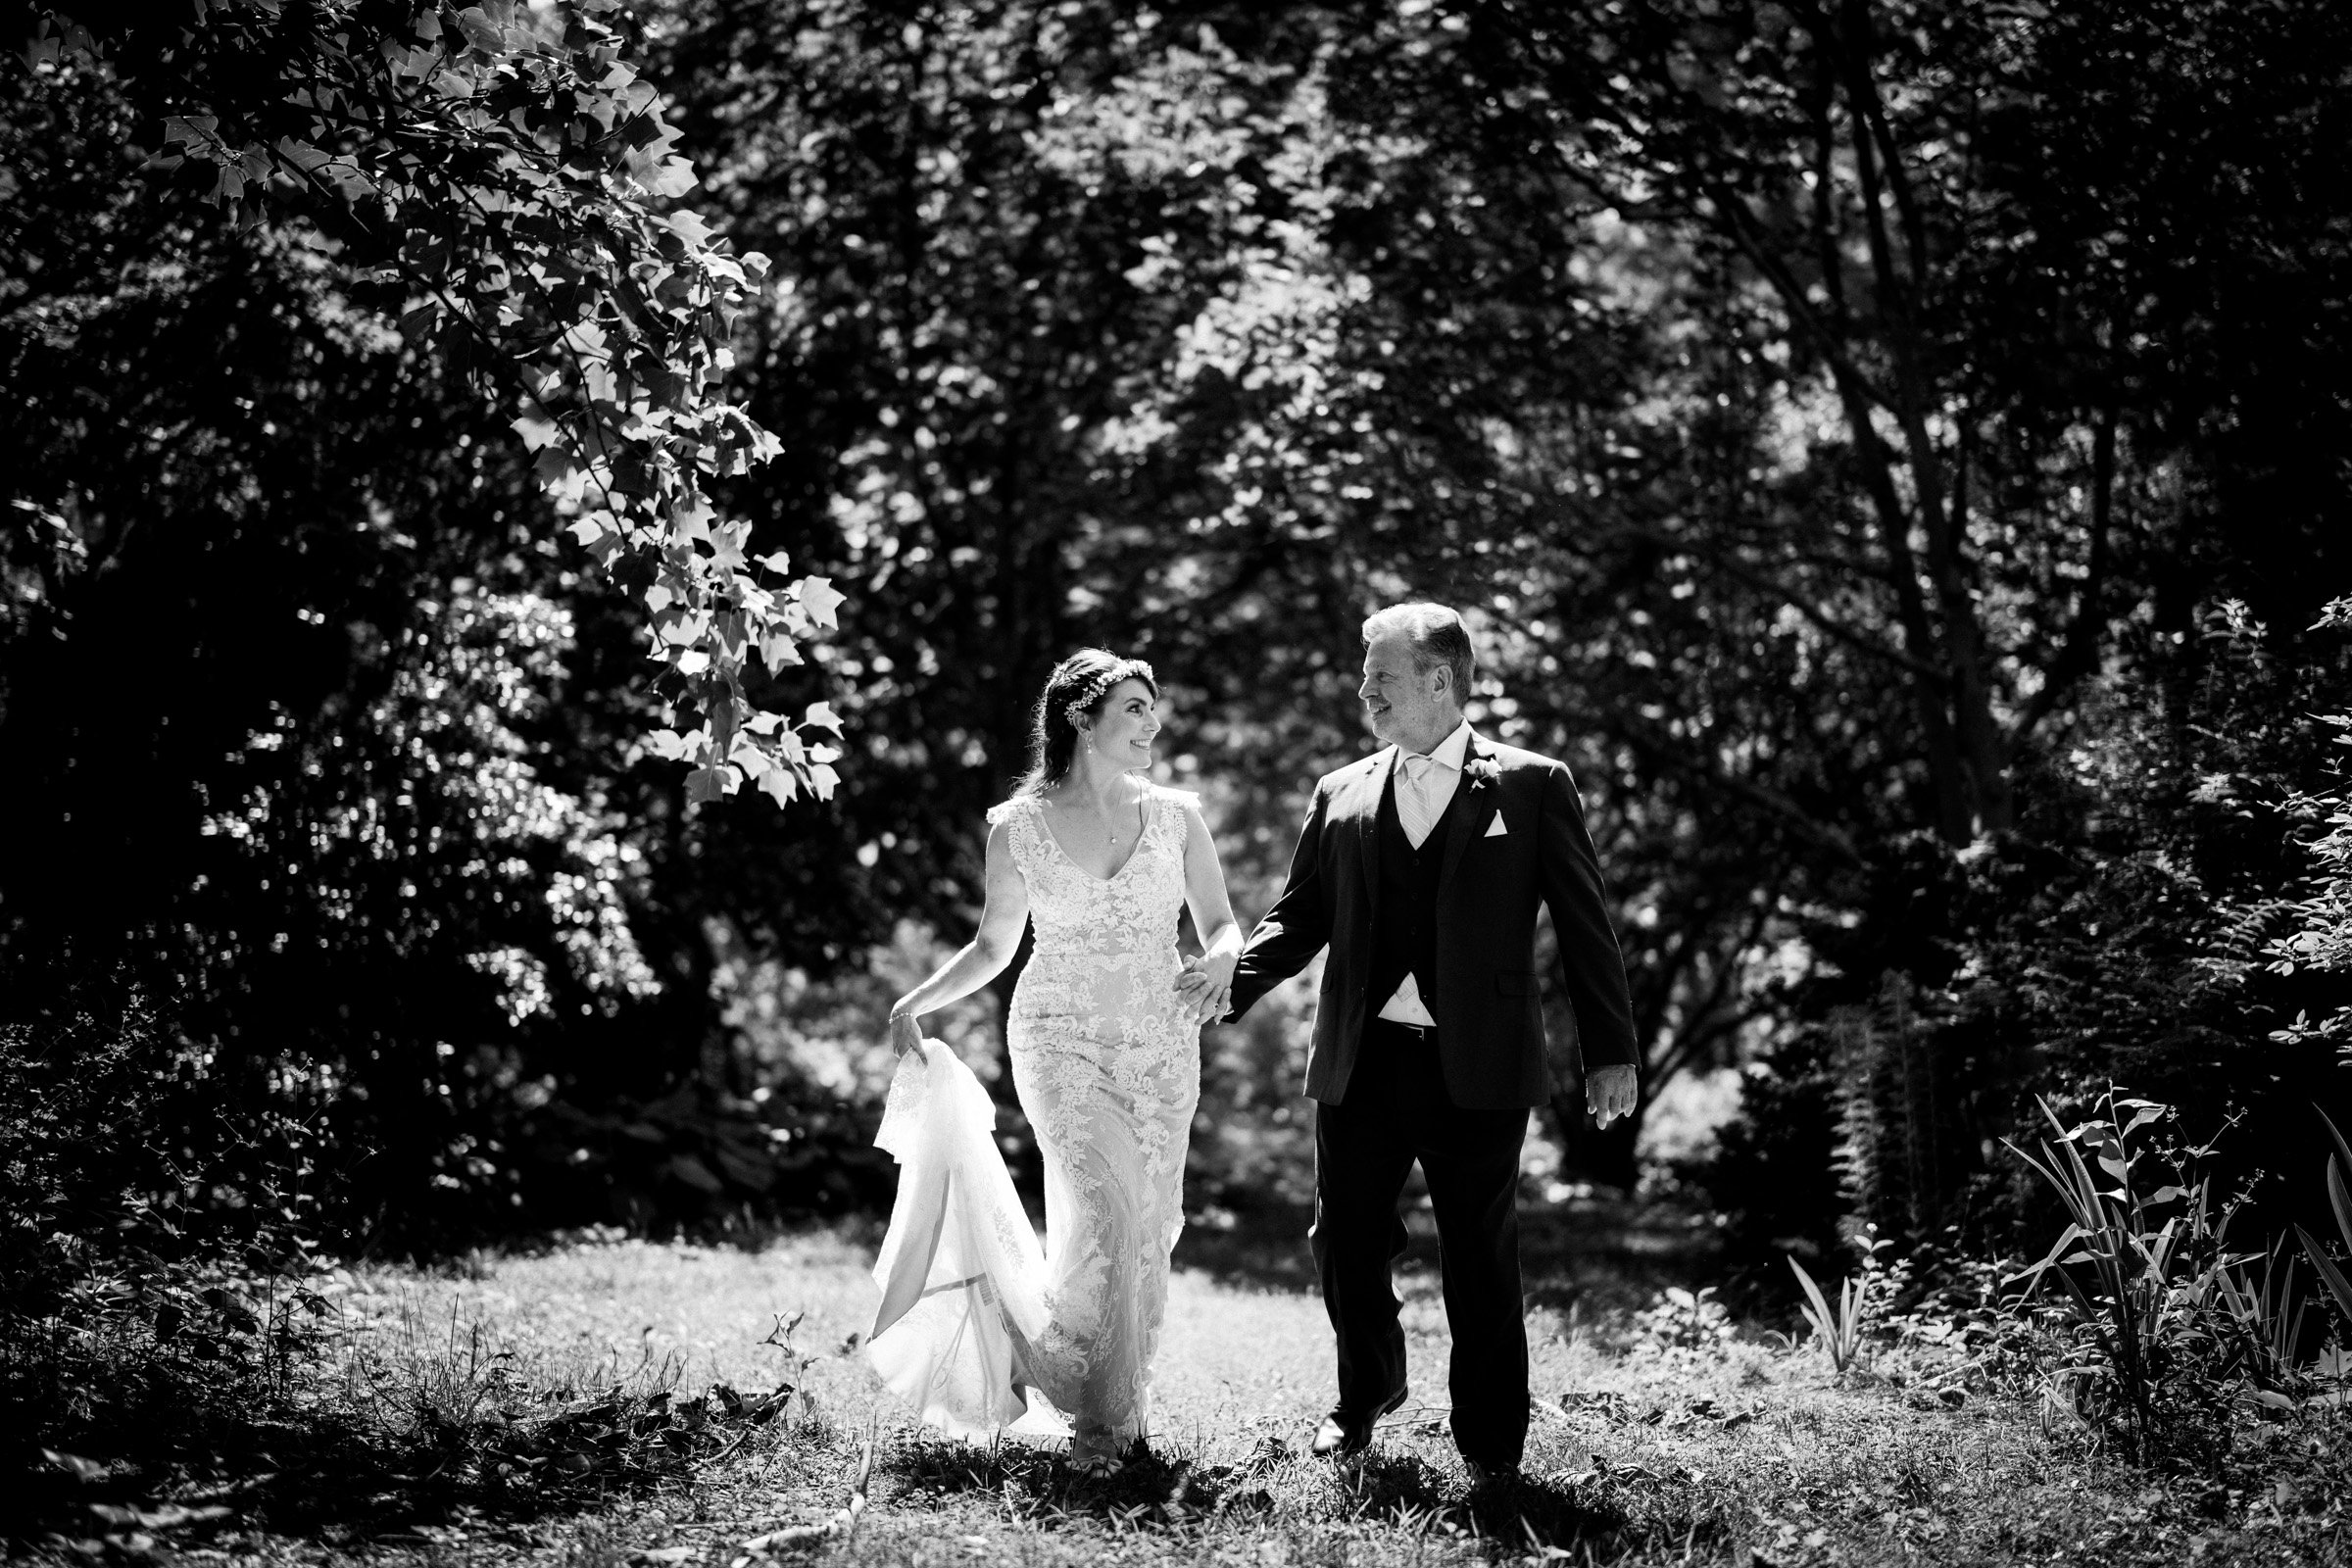 duke gardens wedding photography - ann & tim